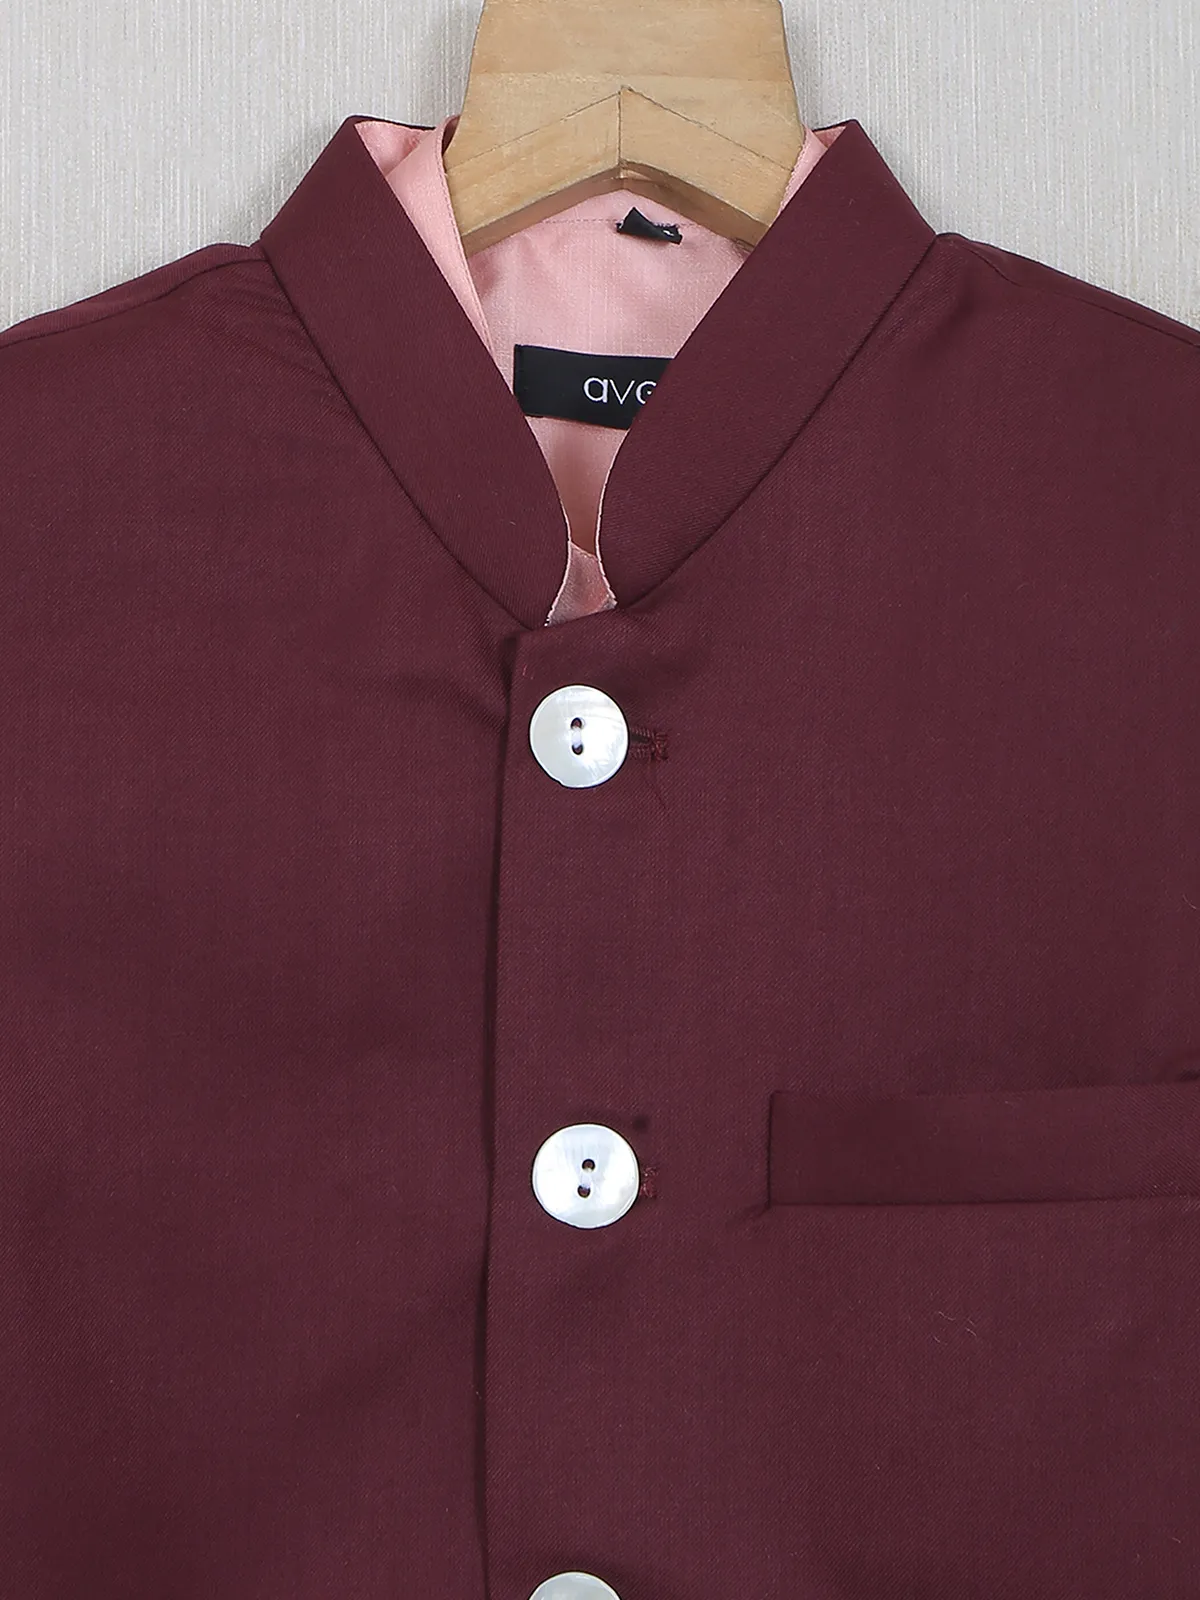 Maroon hued cotton silk waistcoat with shirt